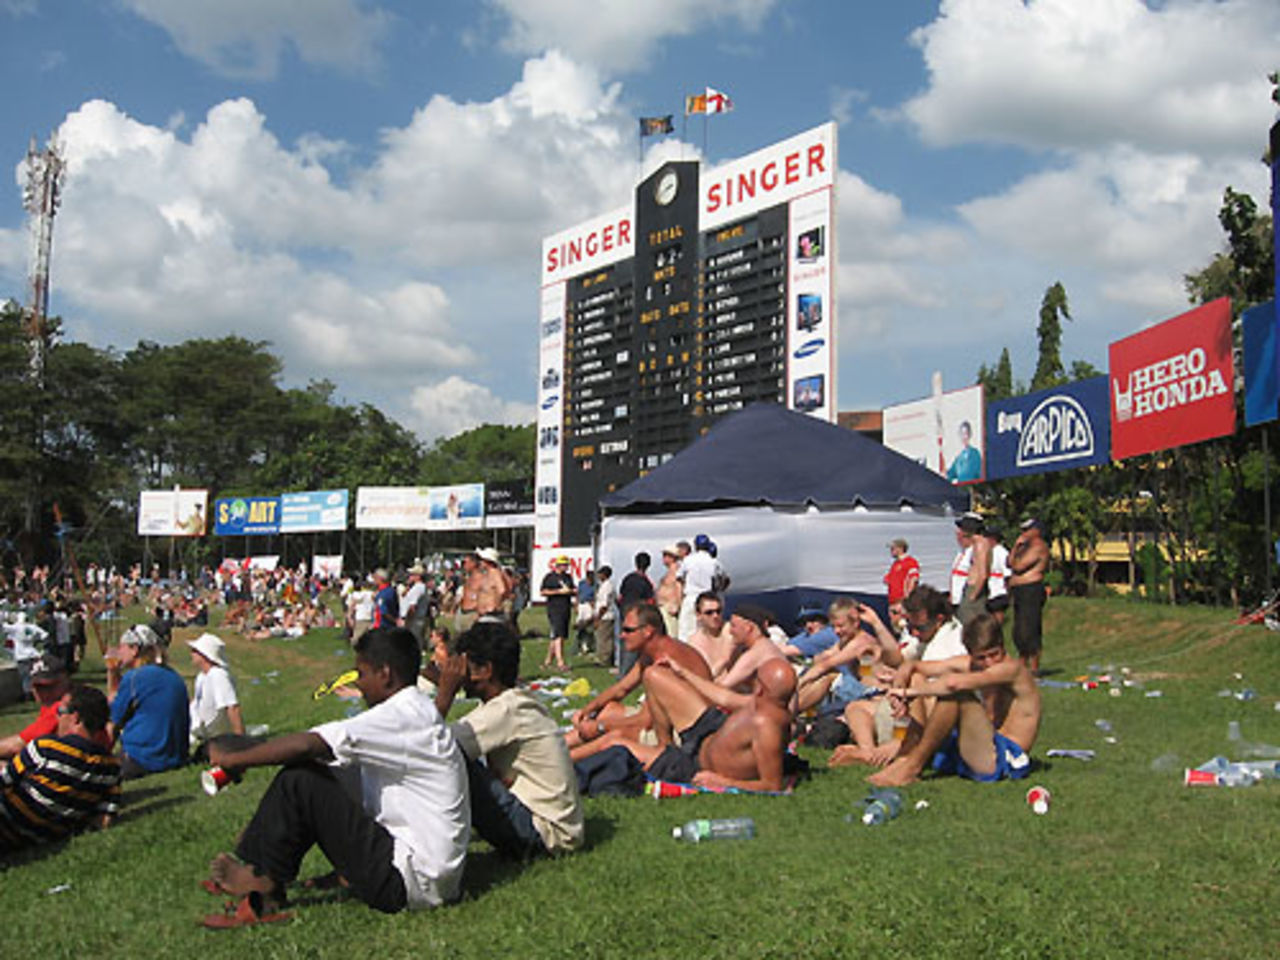 Fans relax on the grass embankment near the giant scoreboard, Sri Lanka v England, 2nd Test, Colombo, 2nd day, December 10, 2007